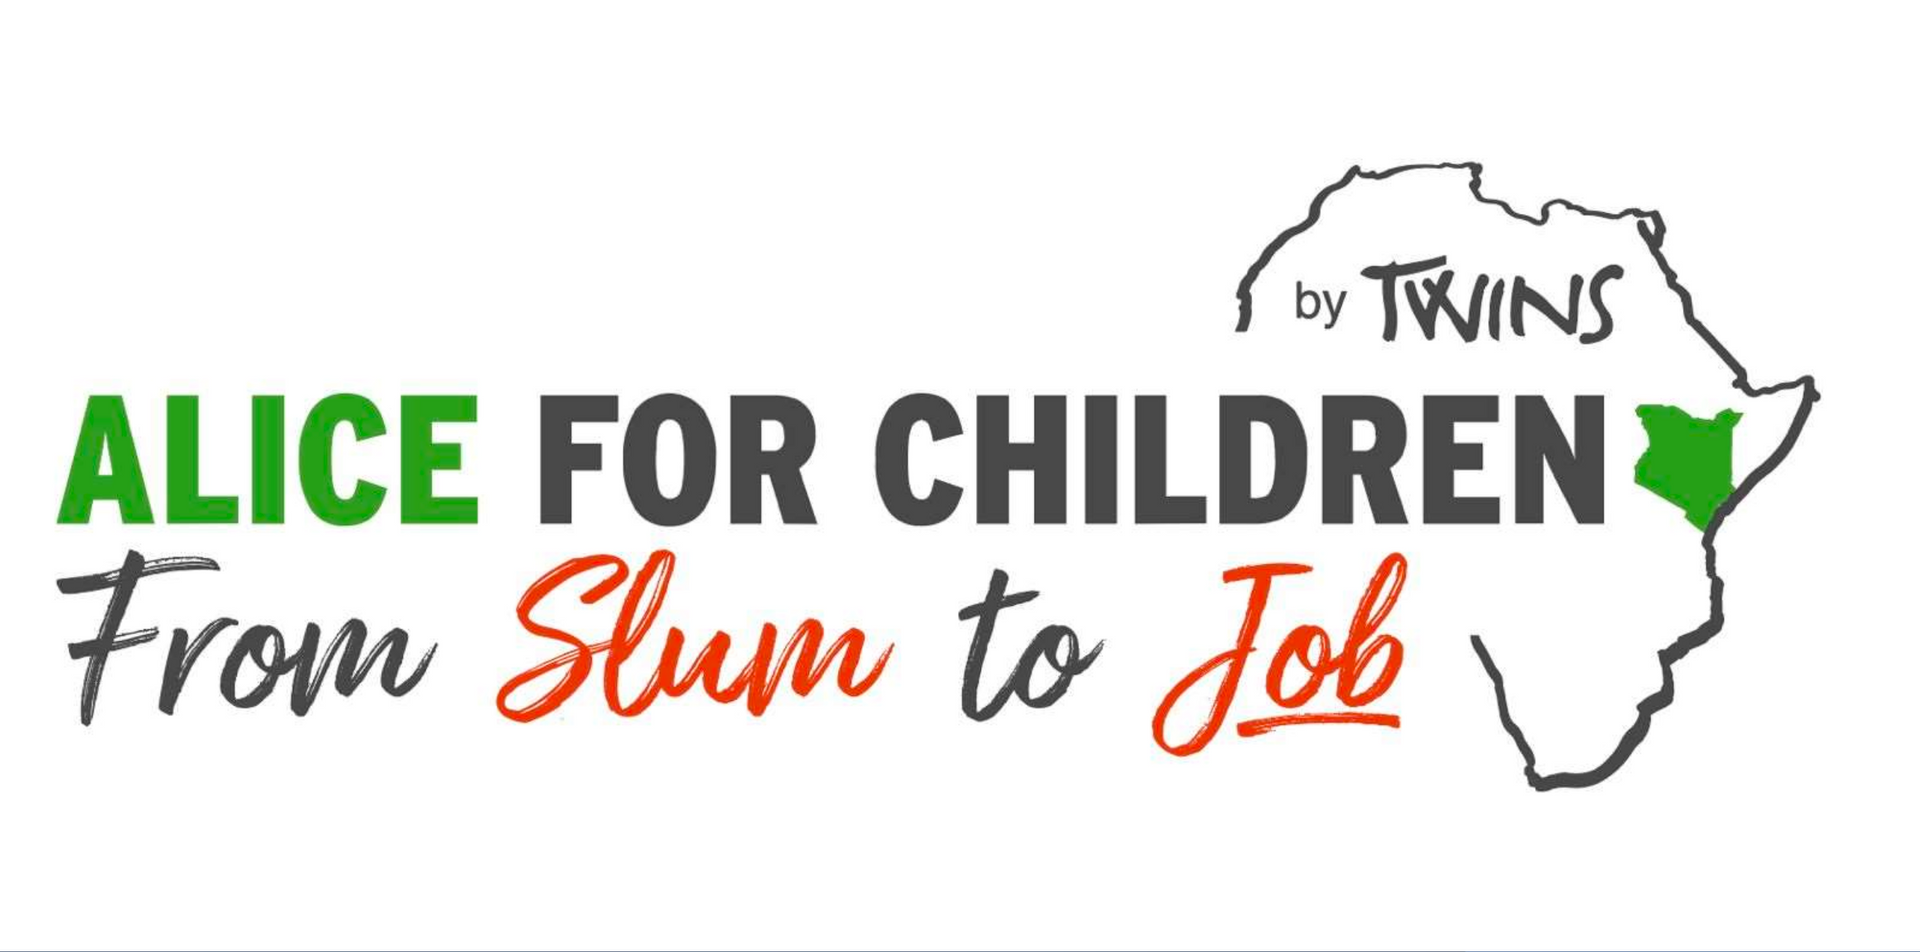 ALICE FOR CHILDREN
From Slum to Job